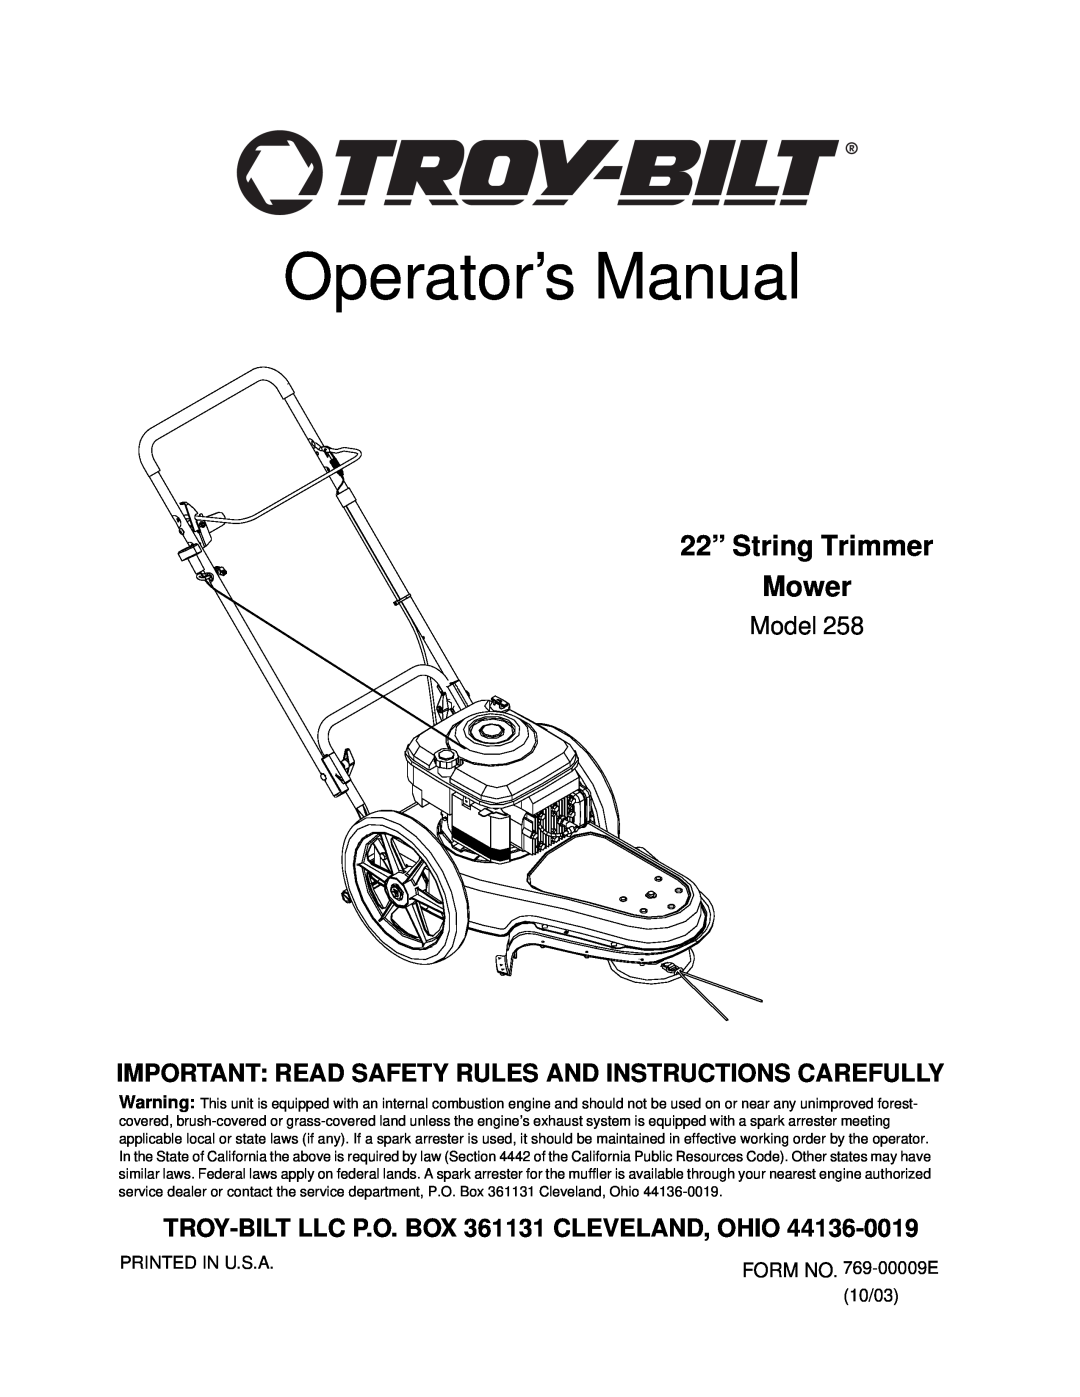 Troy-Bilt 258 manual Operator’s Manual, 22” String Trimmer Mower, Model, TROY-BILT LLC P.O. BOX 361131 CLEVELAND, OHIO 